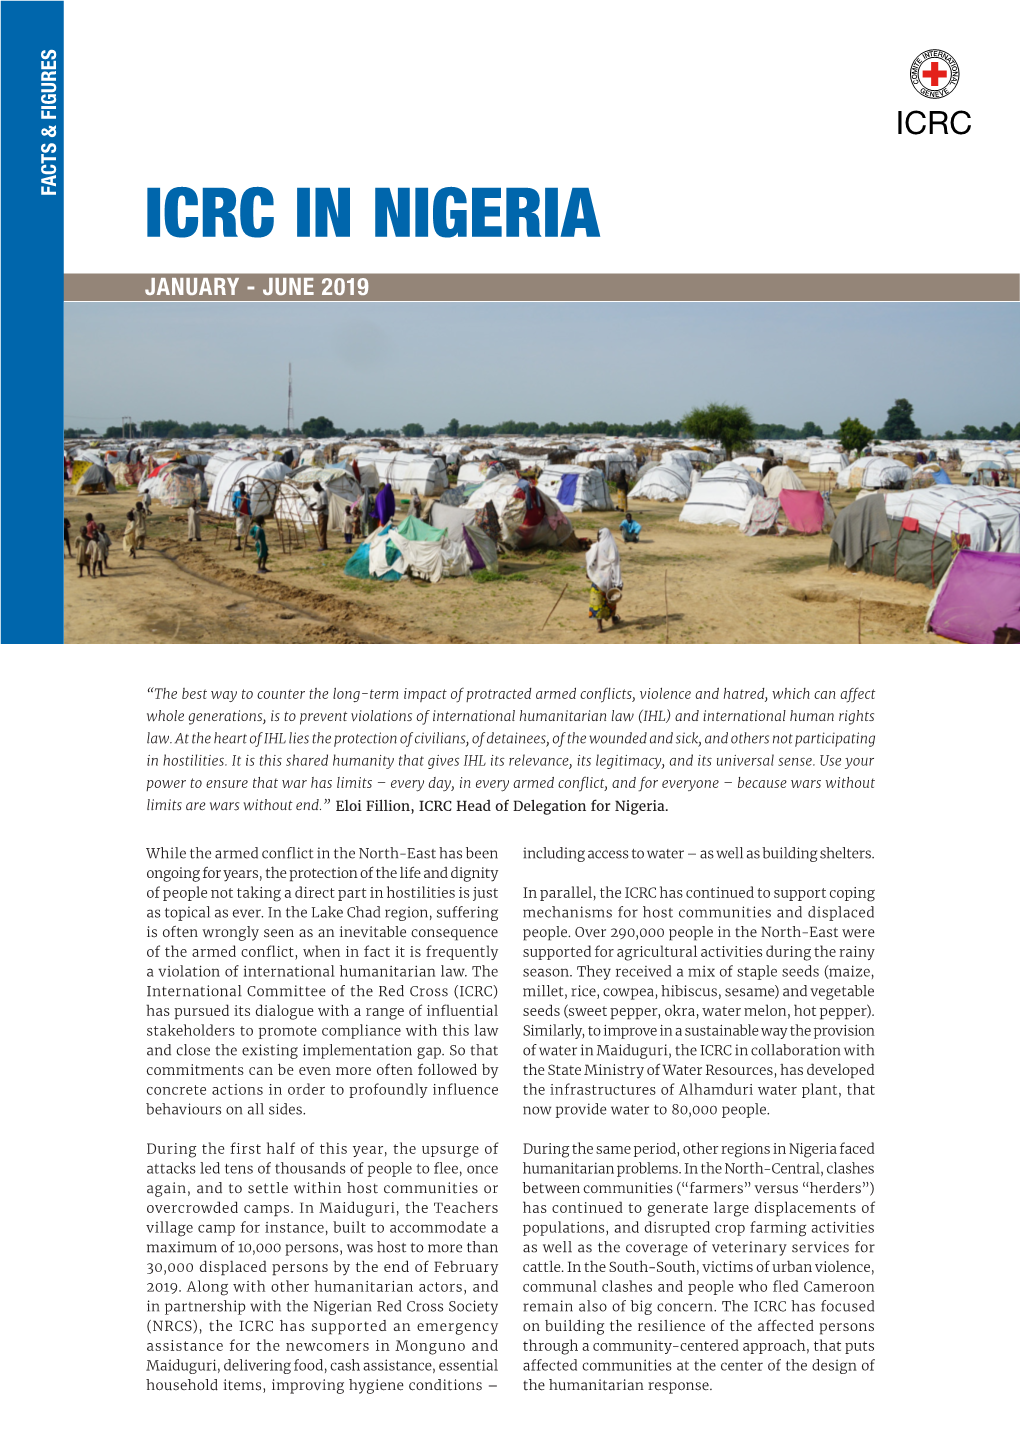 Icrc in Nigeria January - June 2019